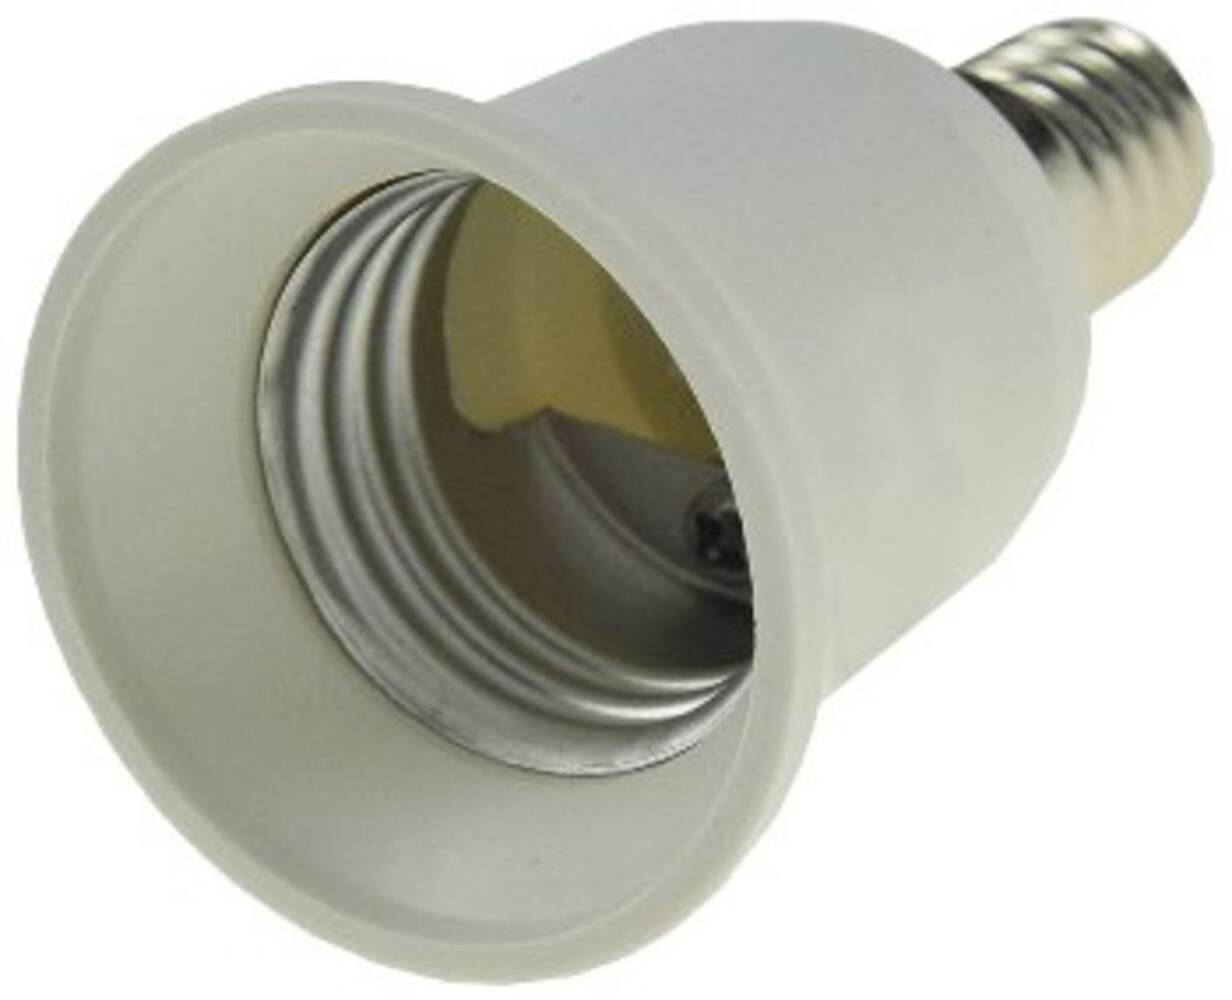 Hochwertiger Lampensockel-Adapter von ChiliTec in robustem Kunststoffdesign